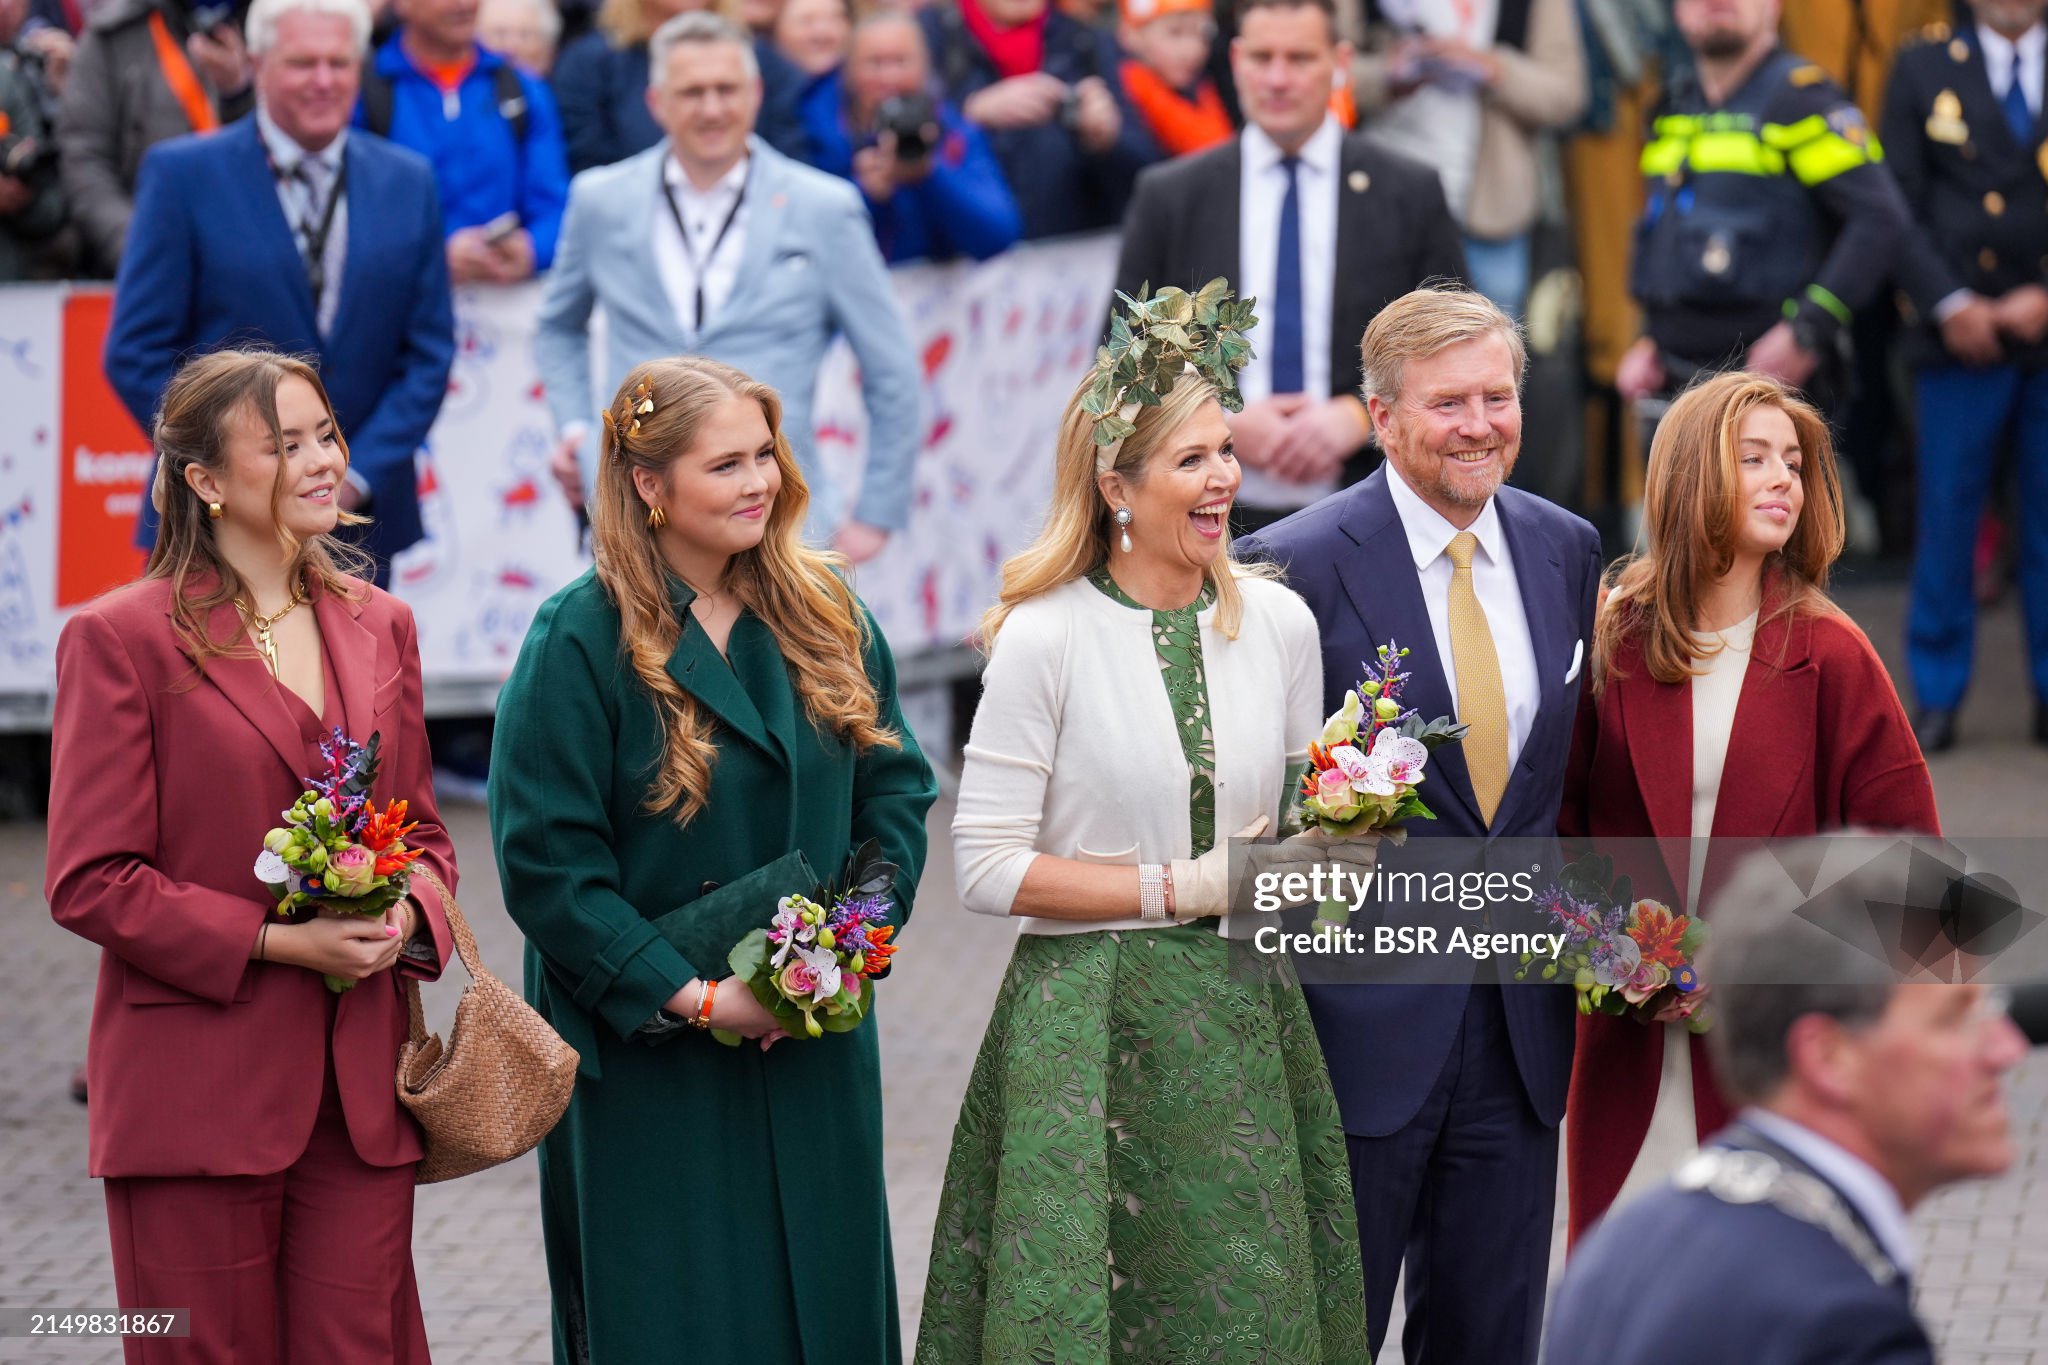 dutch-royal-family-celebrates-kingsday-in-emmen.jpg?s=2048x2048&w=gi&k=20&c=KsOROjYeHsqz2Y09H0E3QU8xGGombpJq9yGi9aEwkzE=